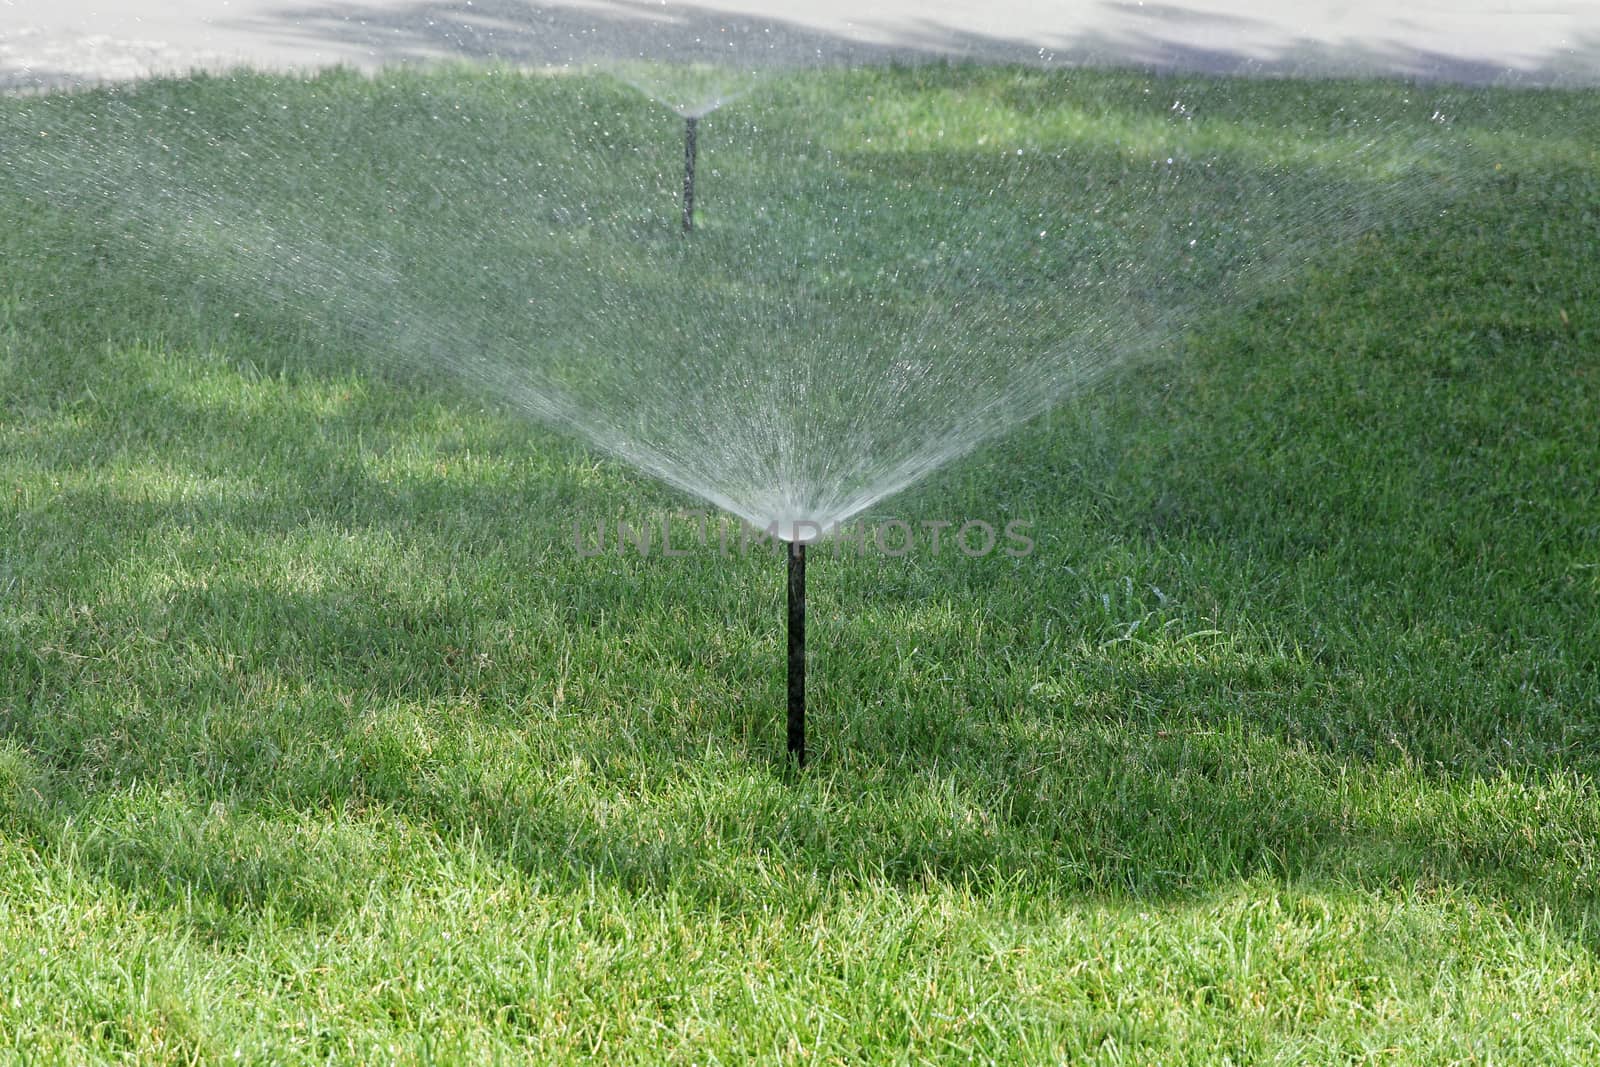 Sprinkler spraying stream of water on lush green grass